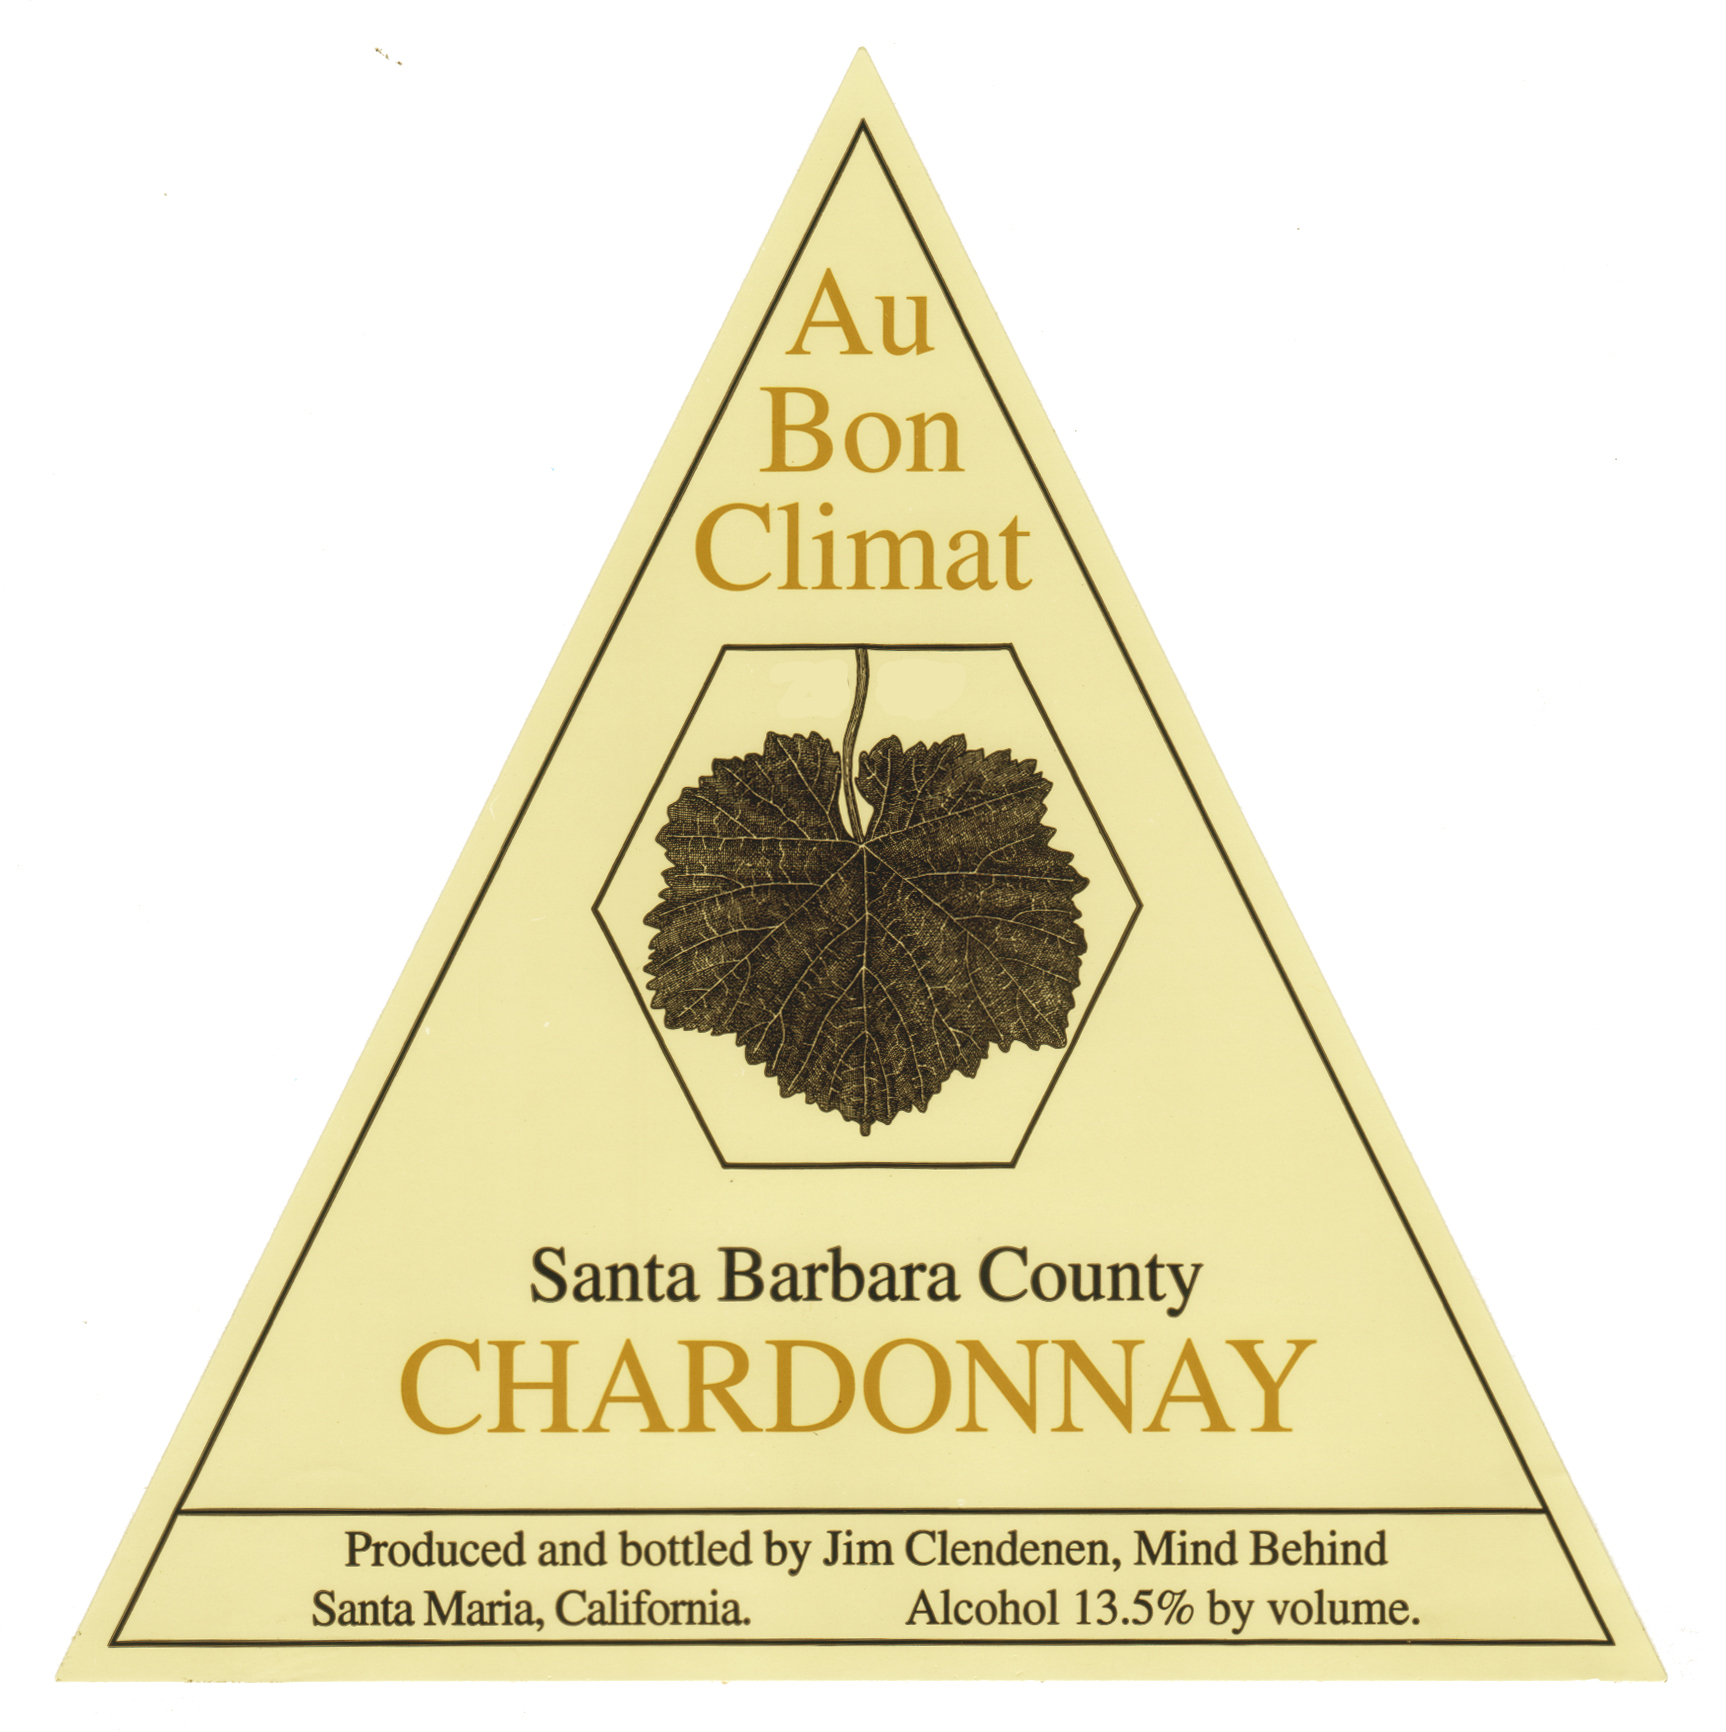 ABC - Santa Barbara Chard - Label